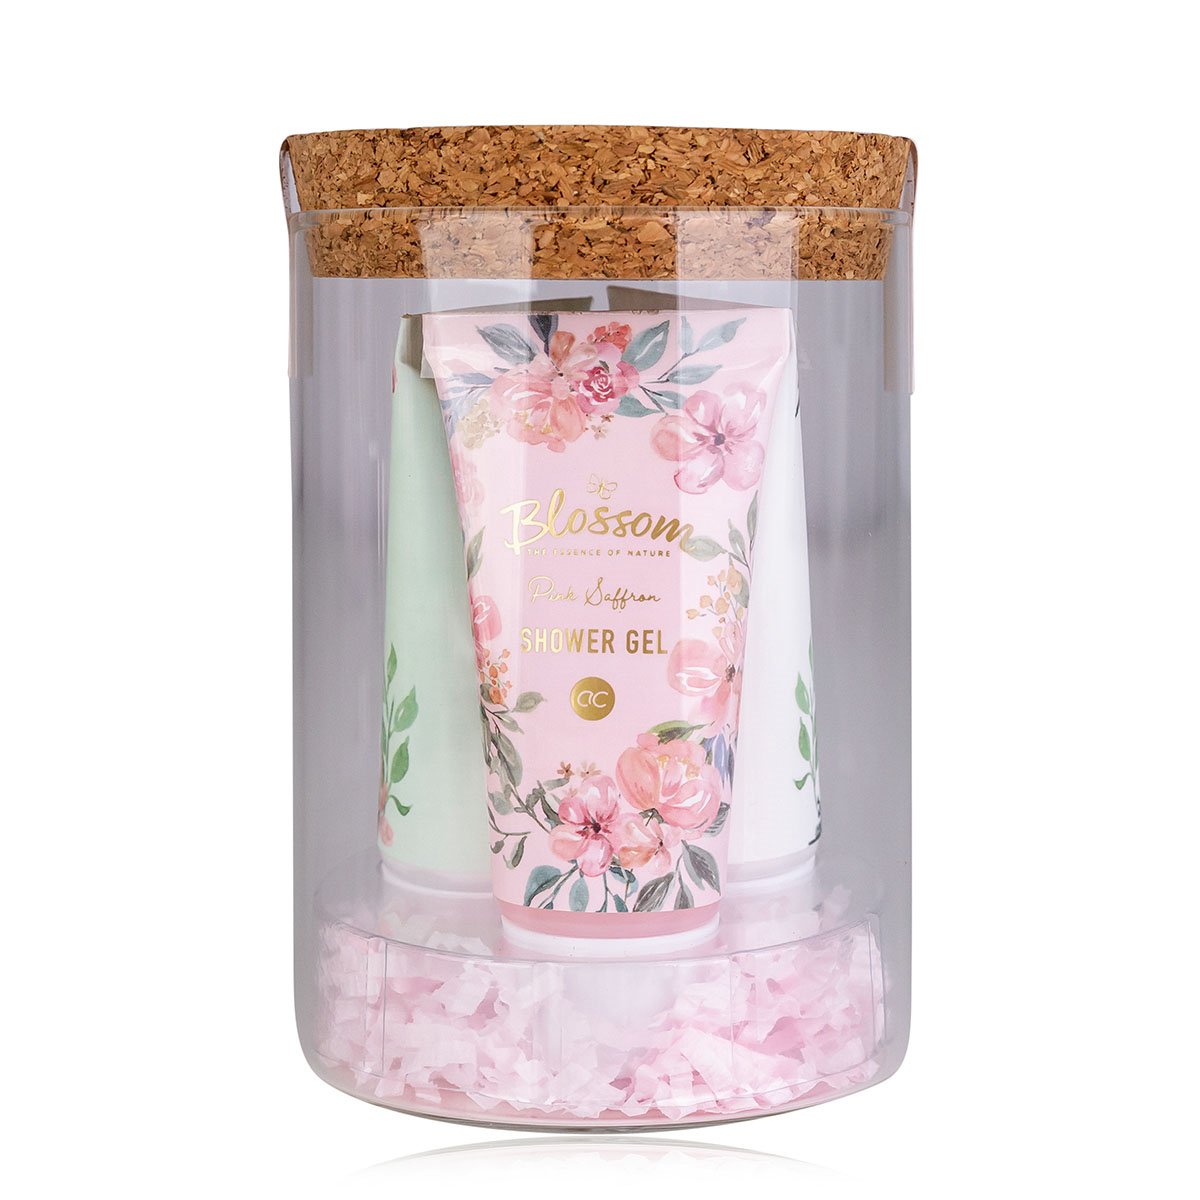 Blossom pink bath set in glass jar